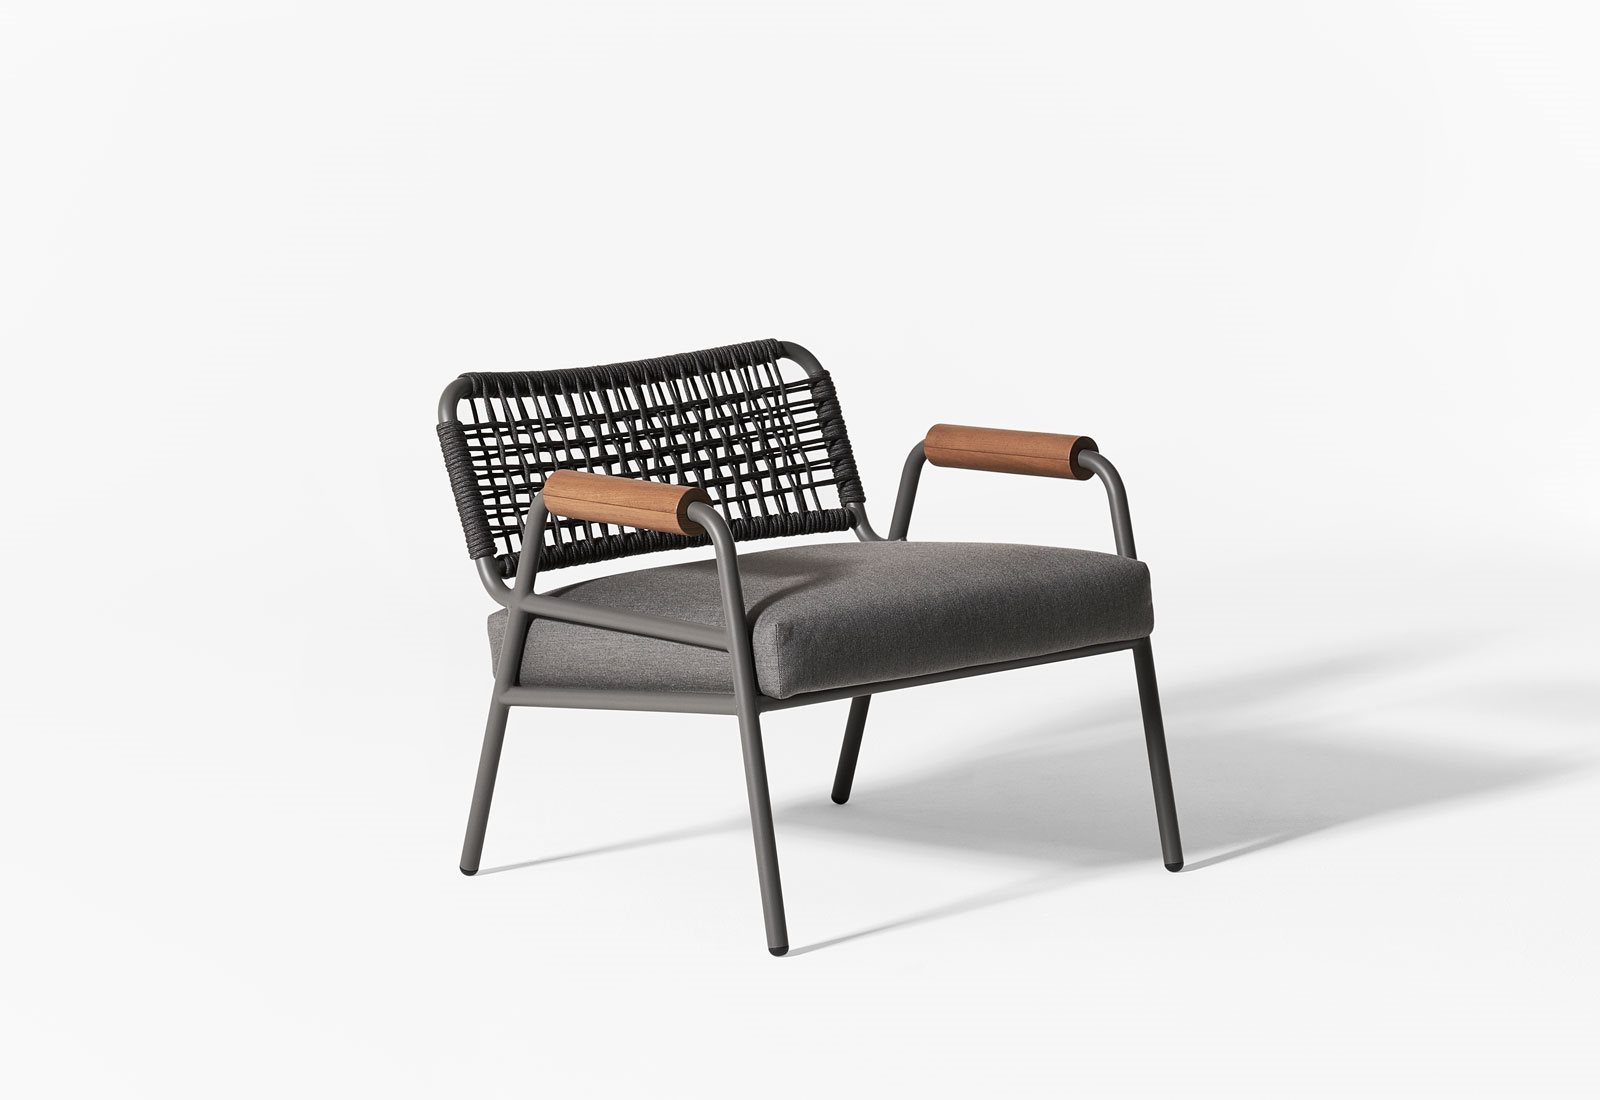 Zoe-Wood-open-air-armchair-01-1600x1100